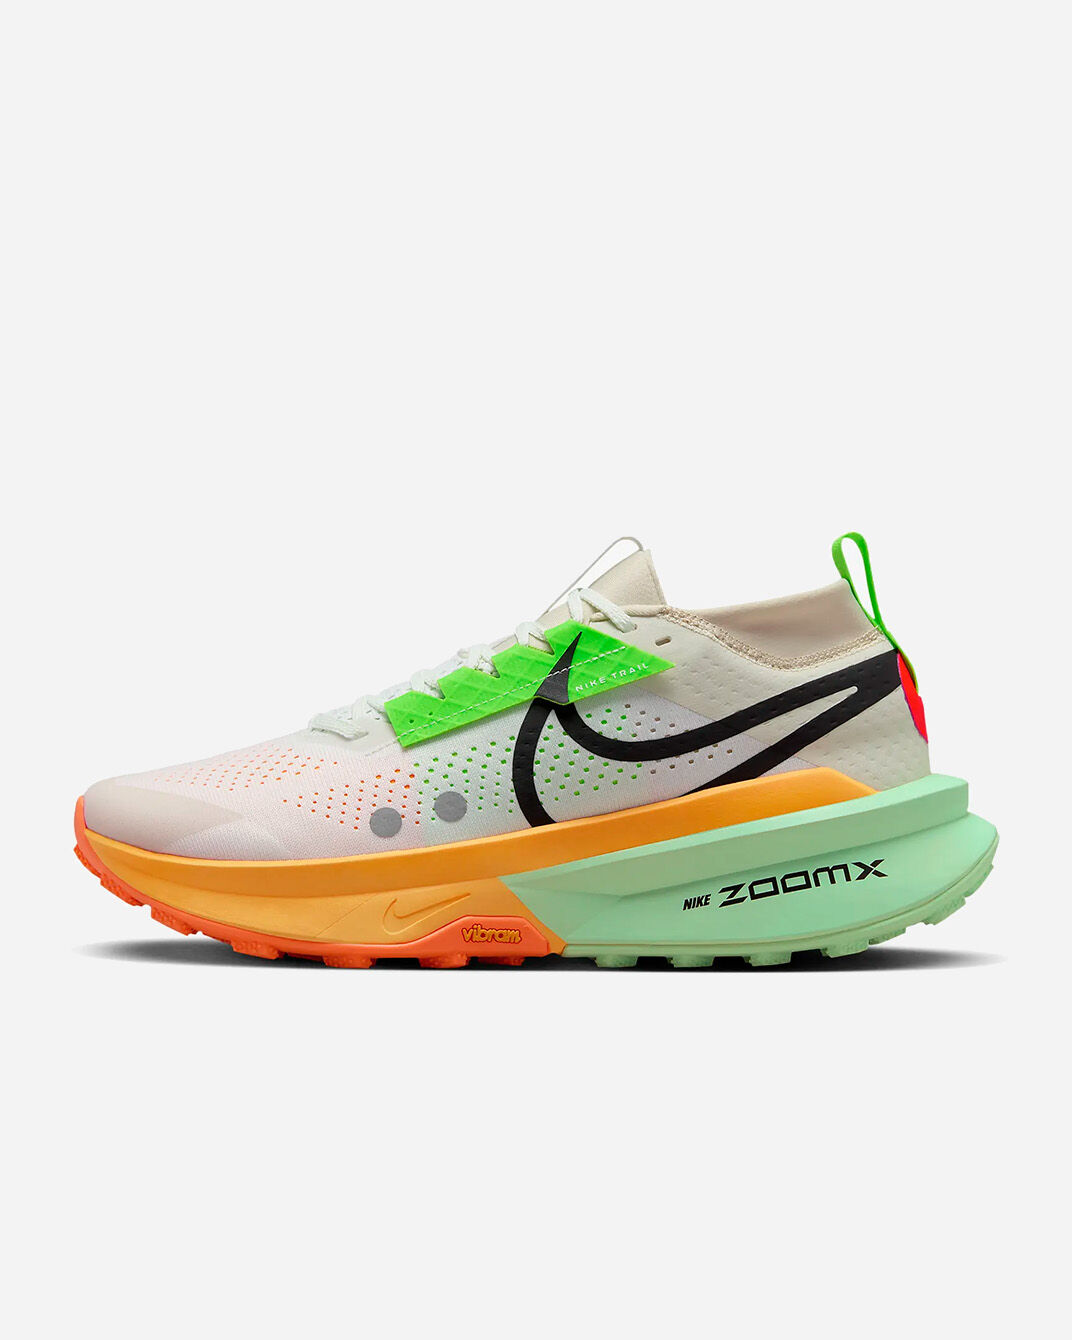 Nike Chaussures de Running Zegama Trail 2 pour Homme Couleur : Summit White/Black-Laser Orange Taille : 44.5 EU   10.5 US 10.5